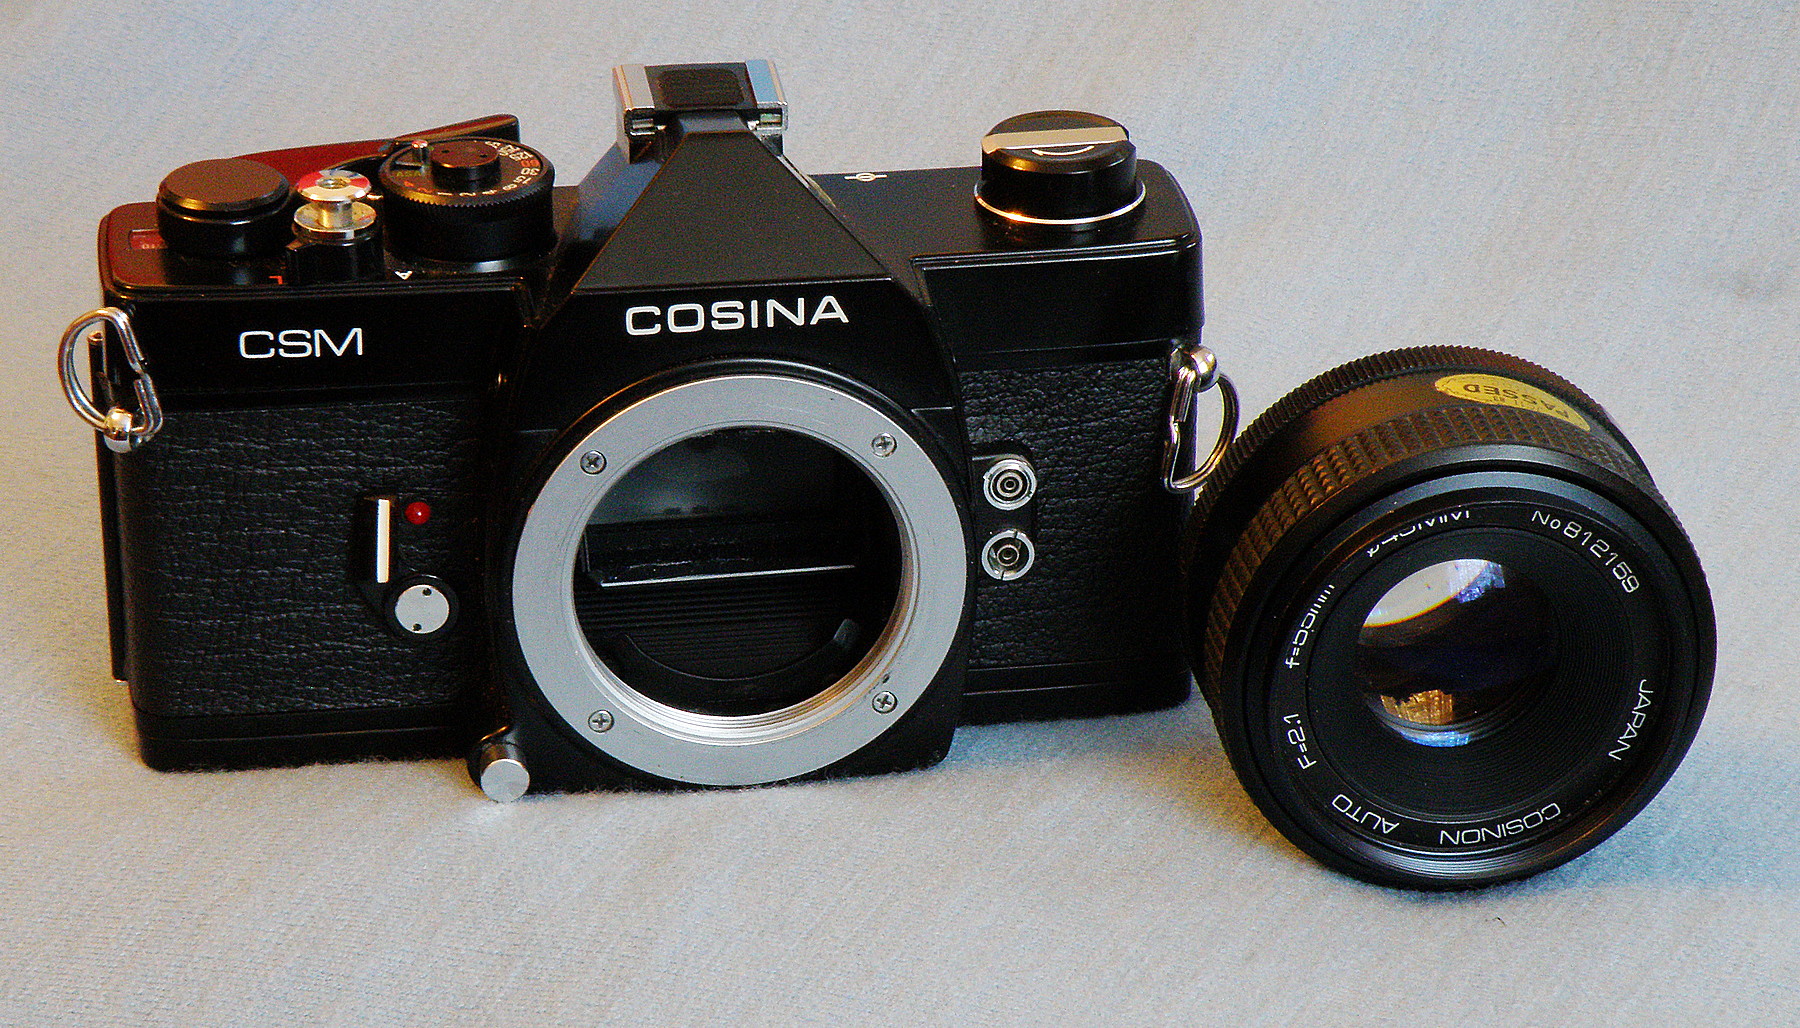 Cosina CSM - Camera